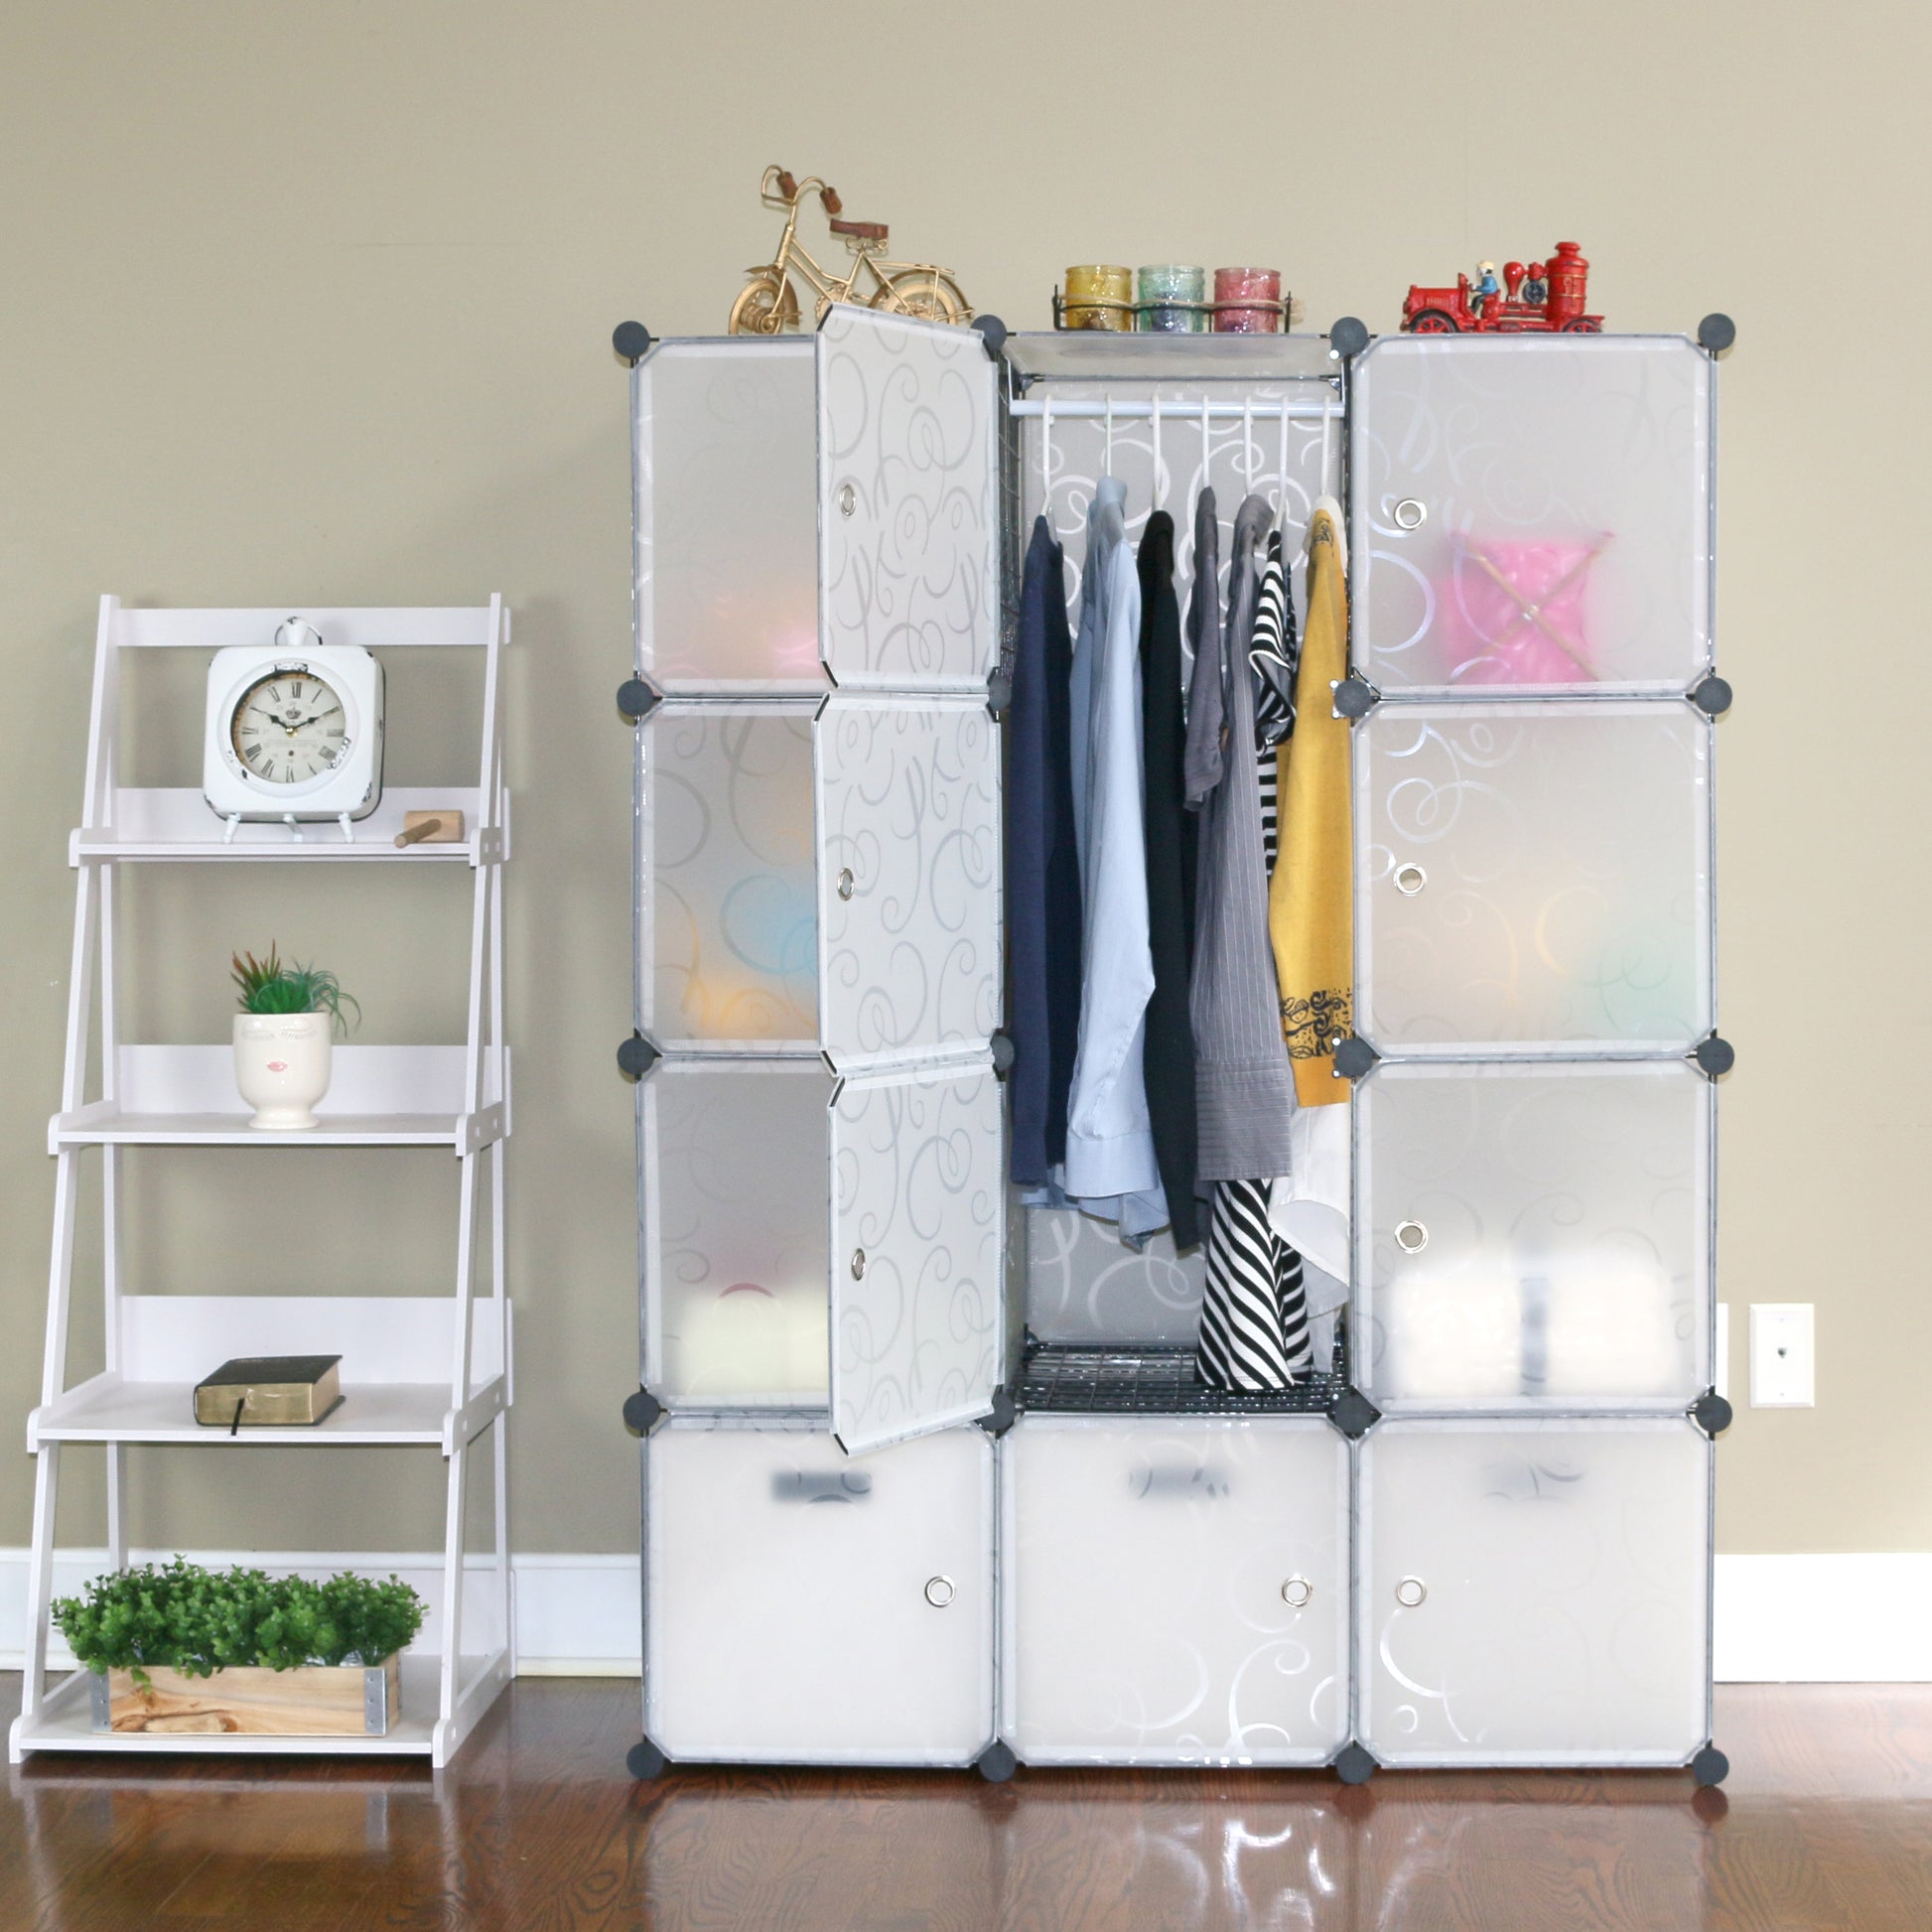 12 Cube Storage Shelves, DIY Plastic Closet Cabinet Organizer